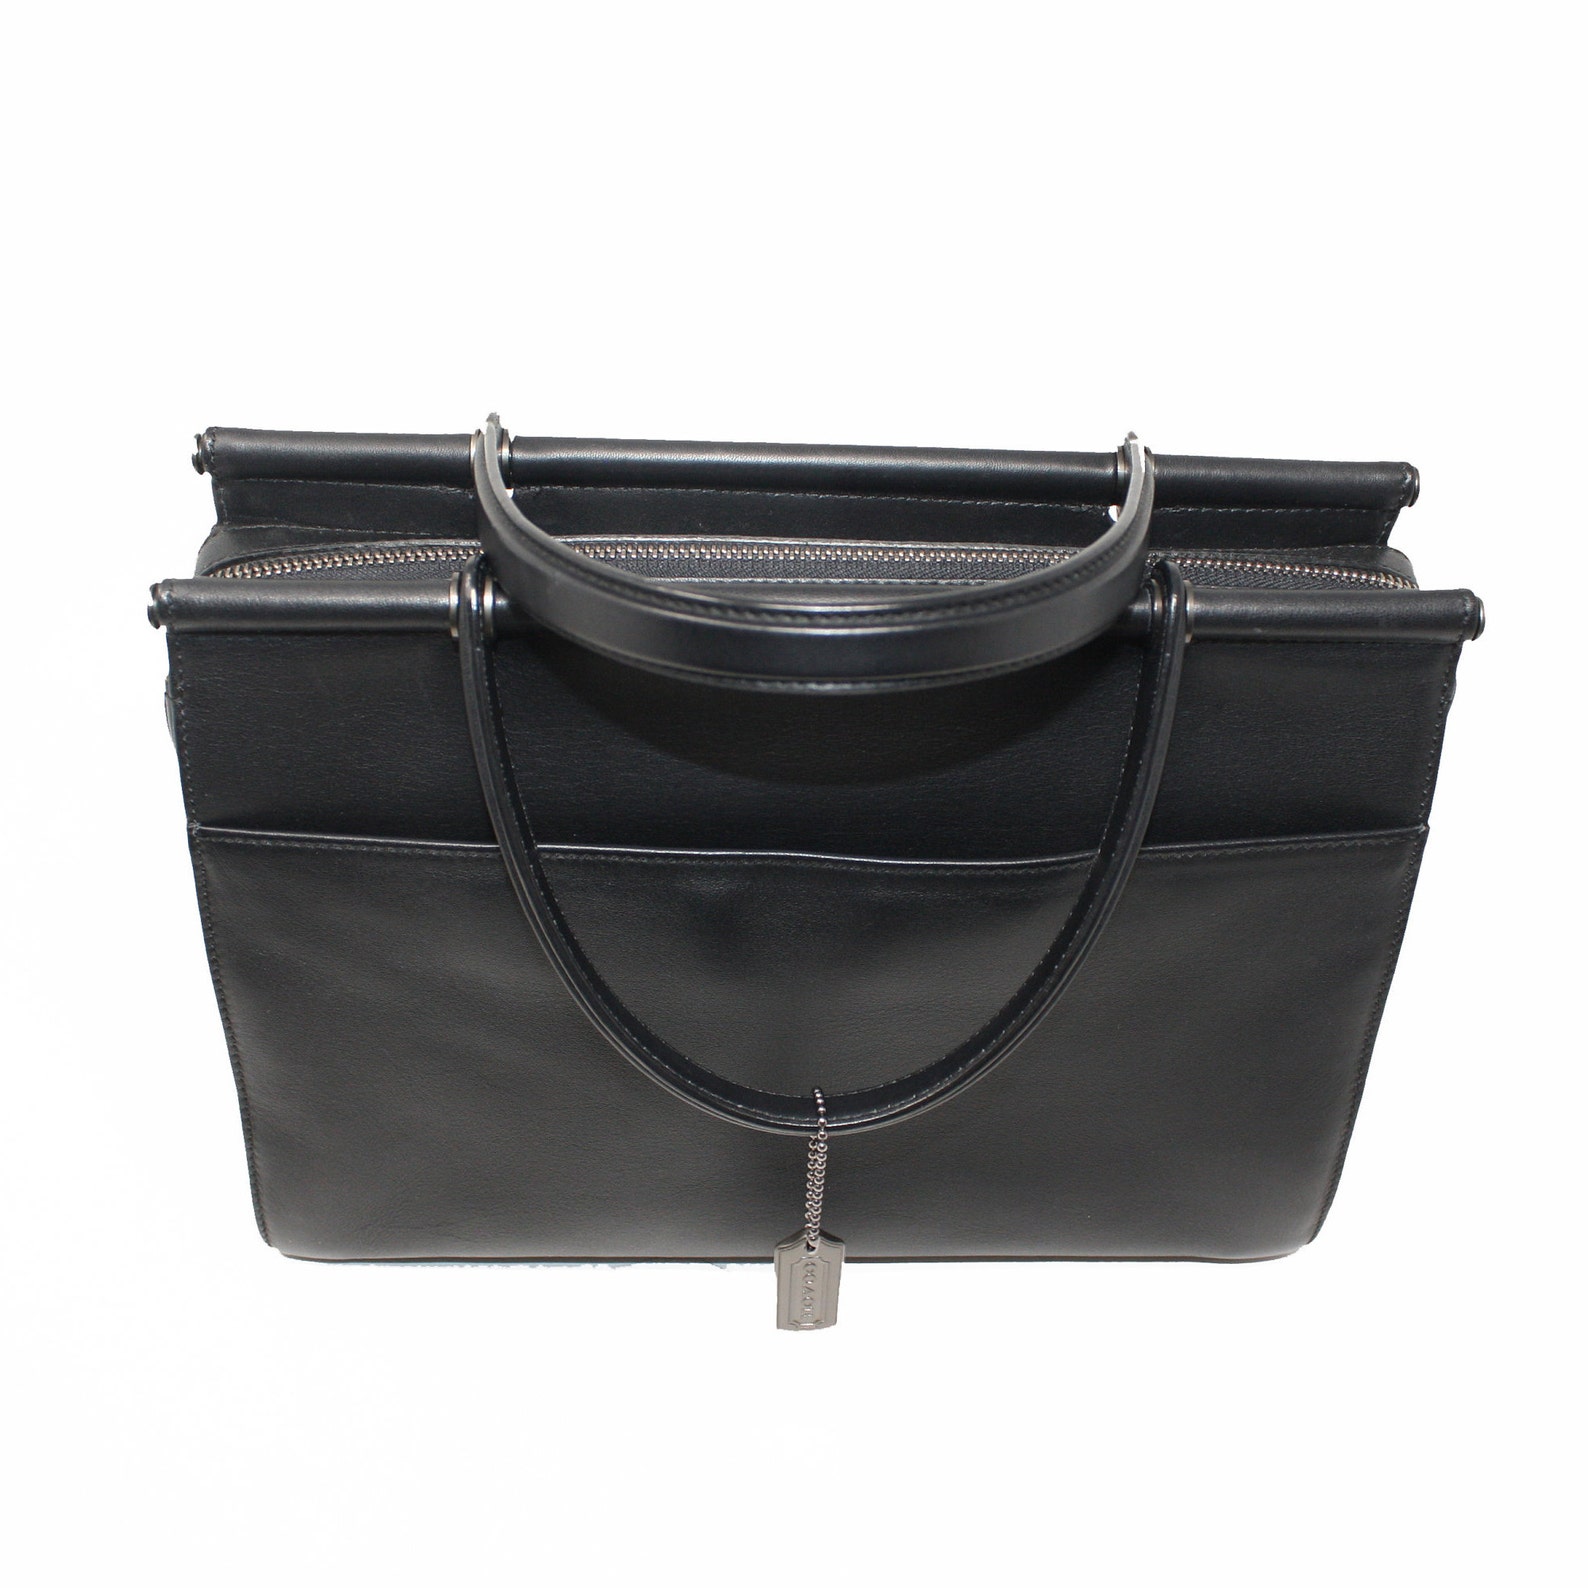 Vintage Coach Whitney Satchel Bag Style 9182 in Black Leather | Etsy